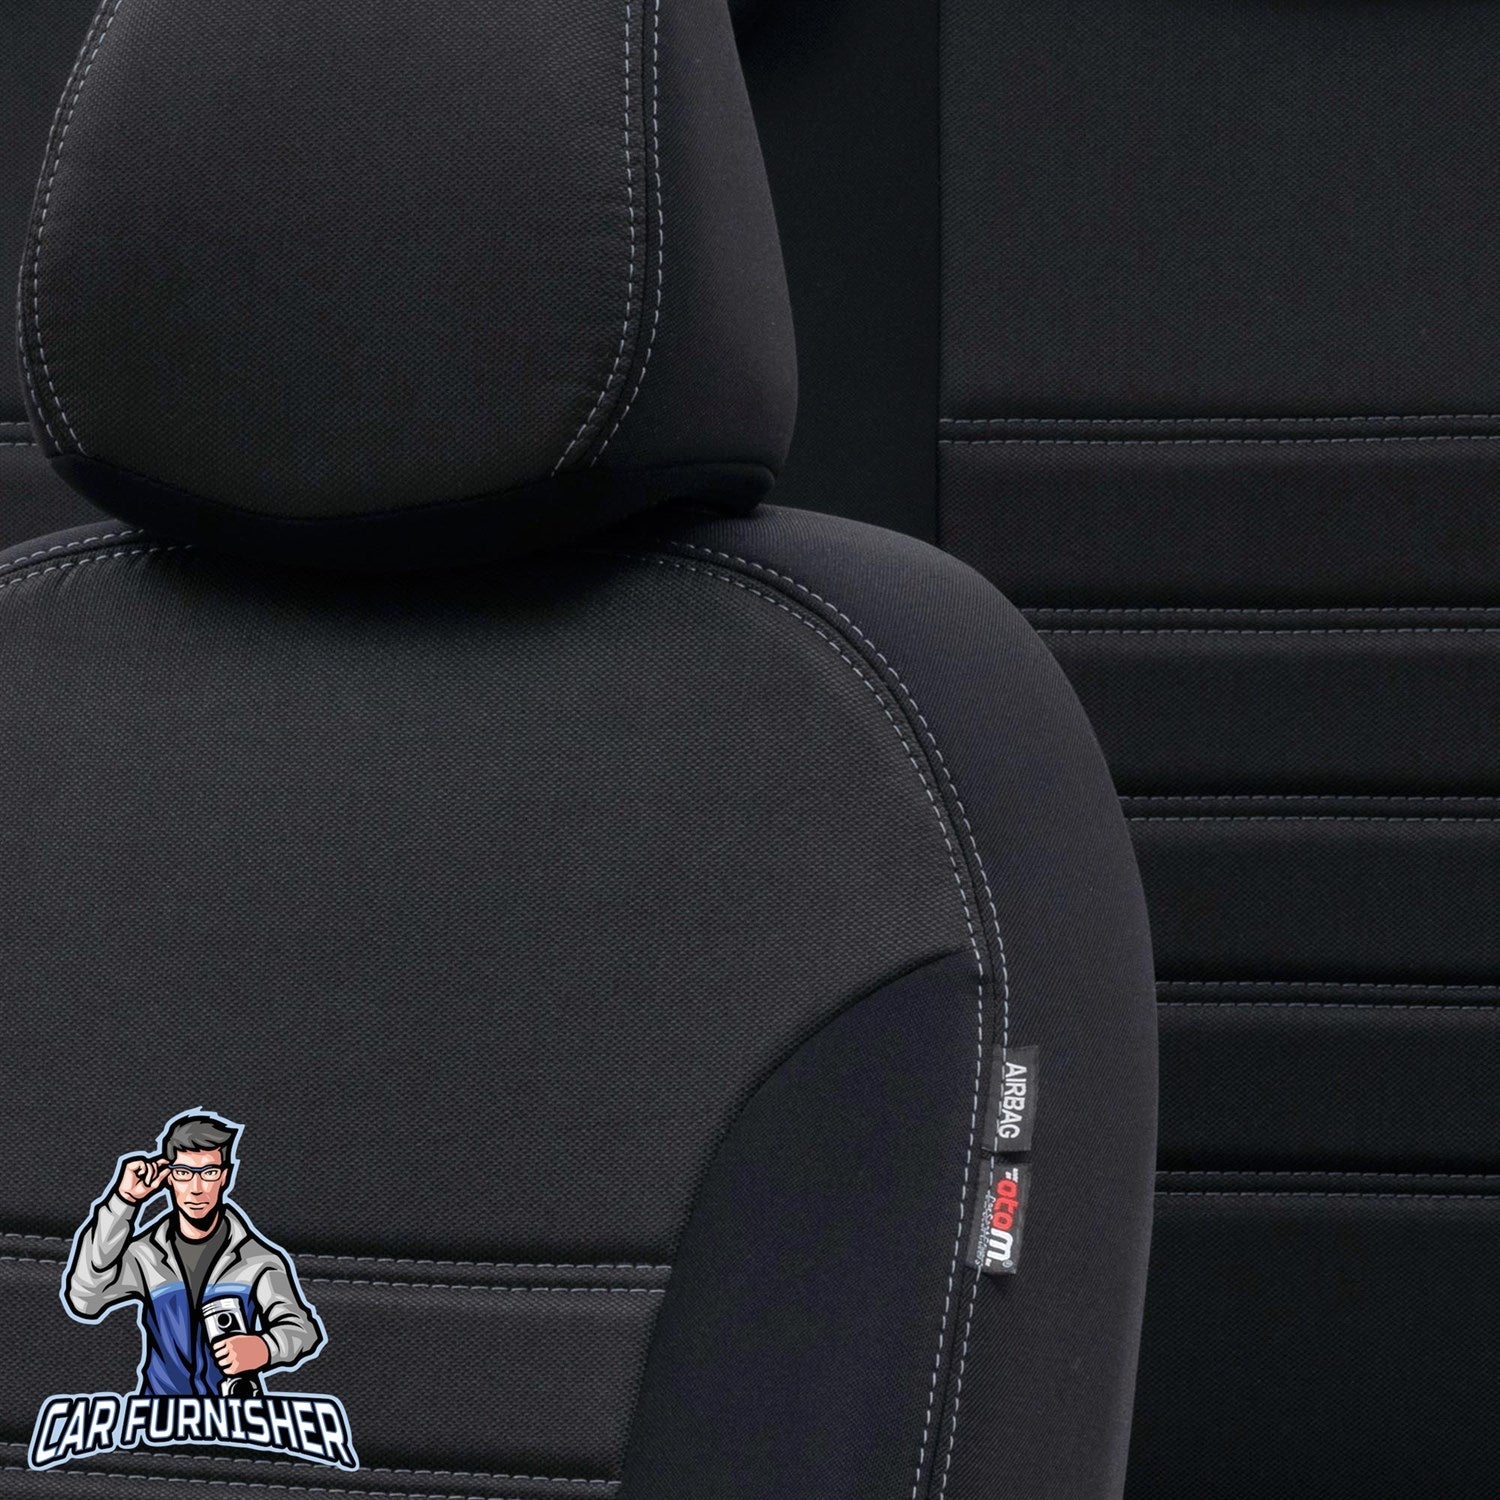 Kia XCeed Seat Covers Original Jacquard Design Black Jacquard Fabric